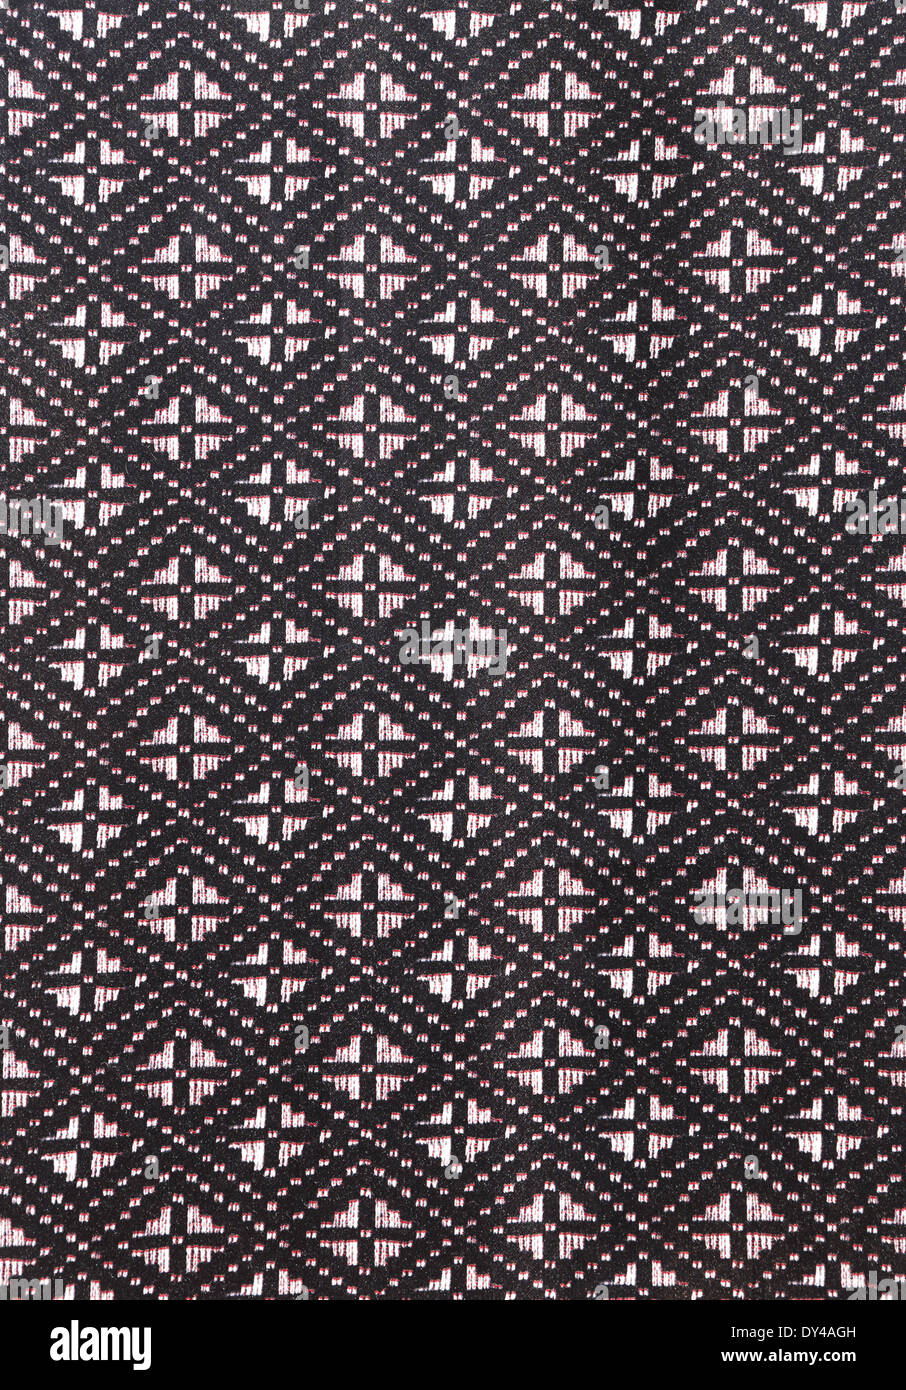  Xtremepads Thai Silk Fabric Pattern Pattern